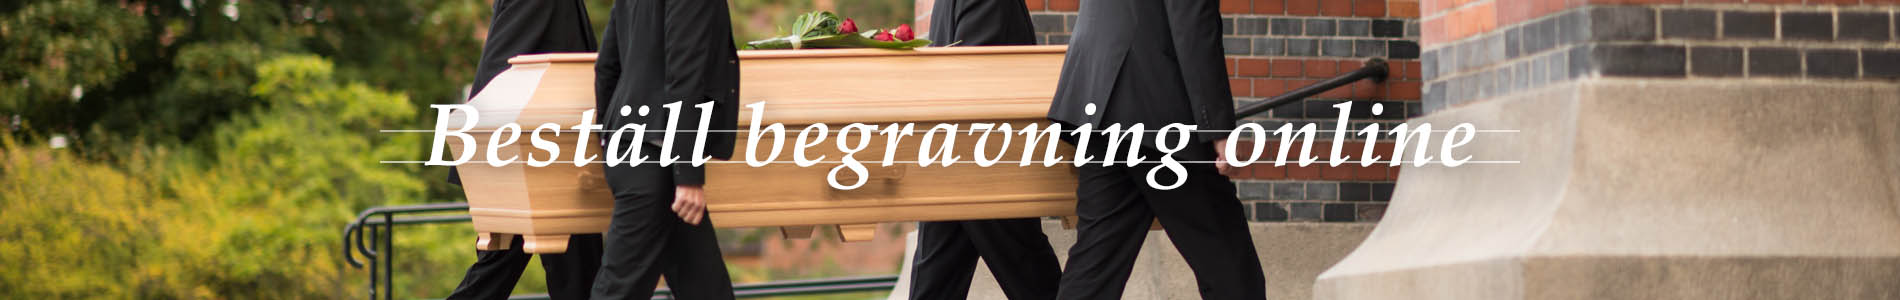 Axelssons-Begravningsbyrå-Min-Sida-banner_online